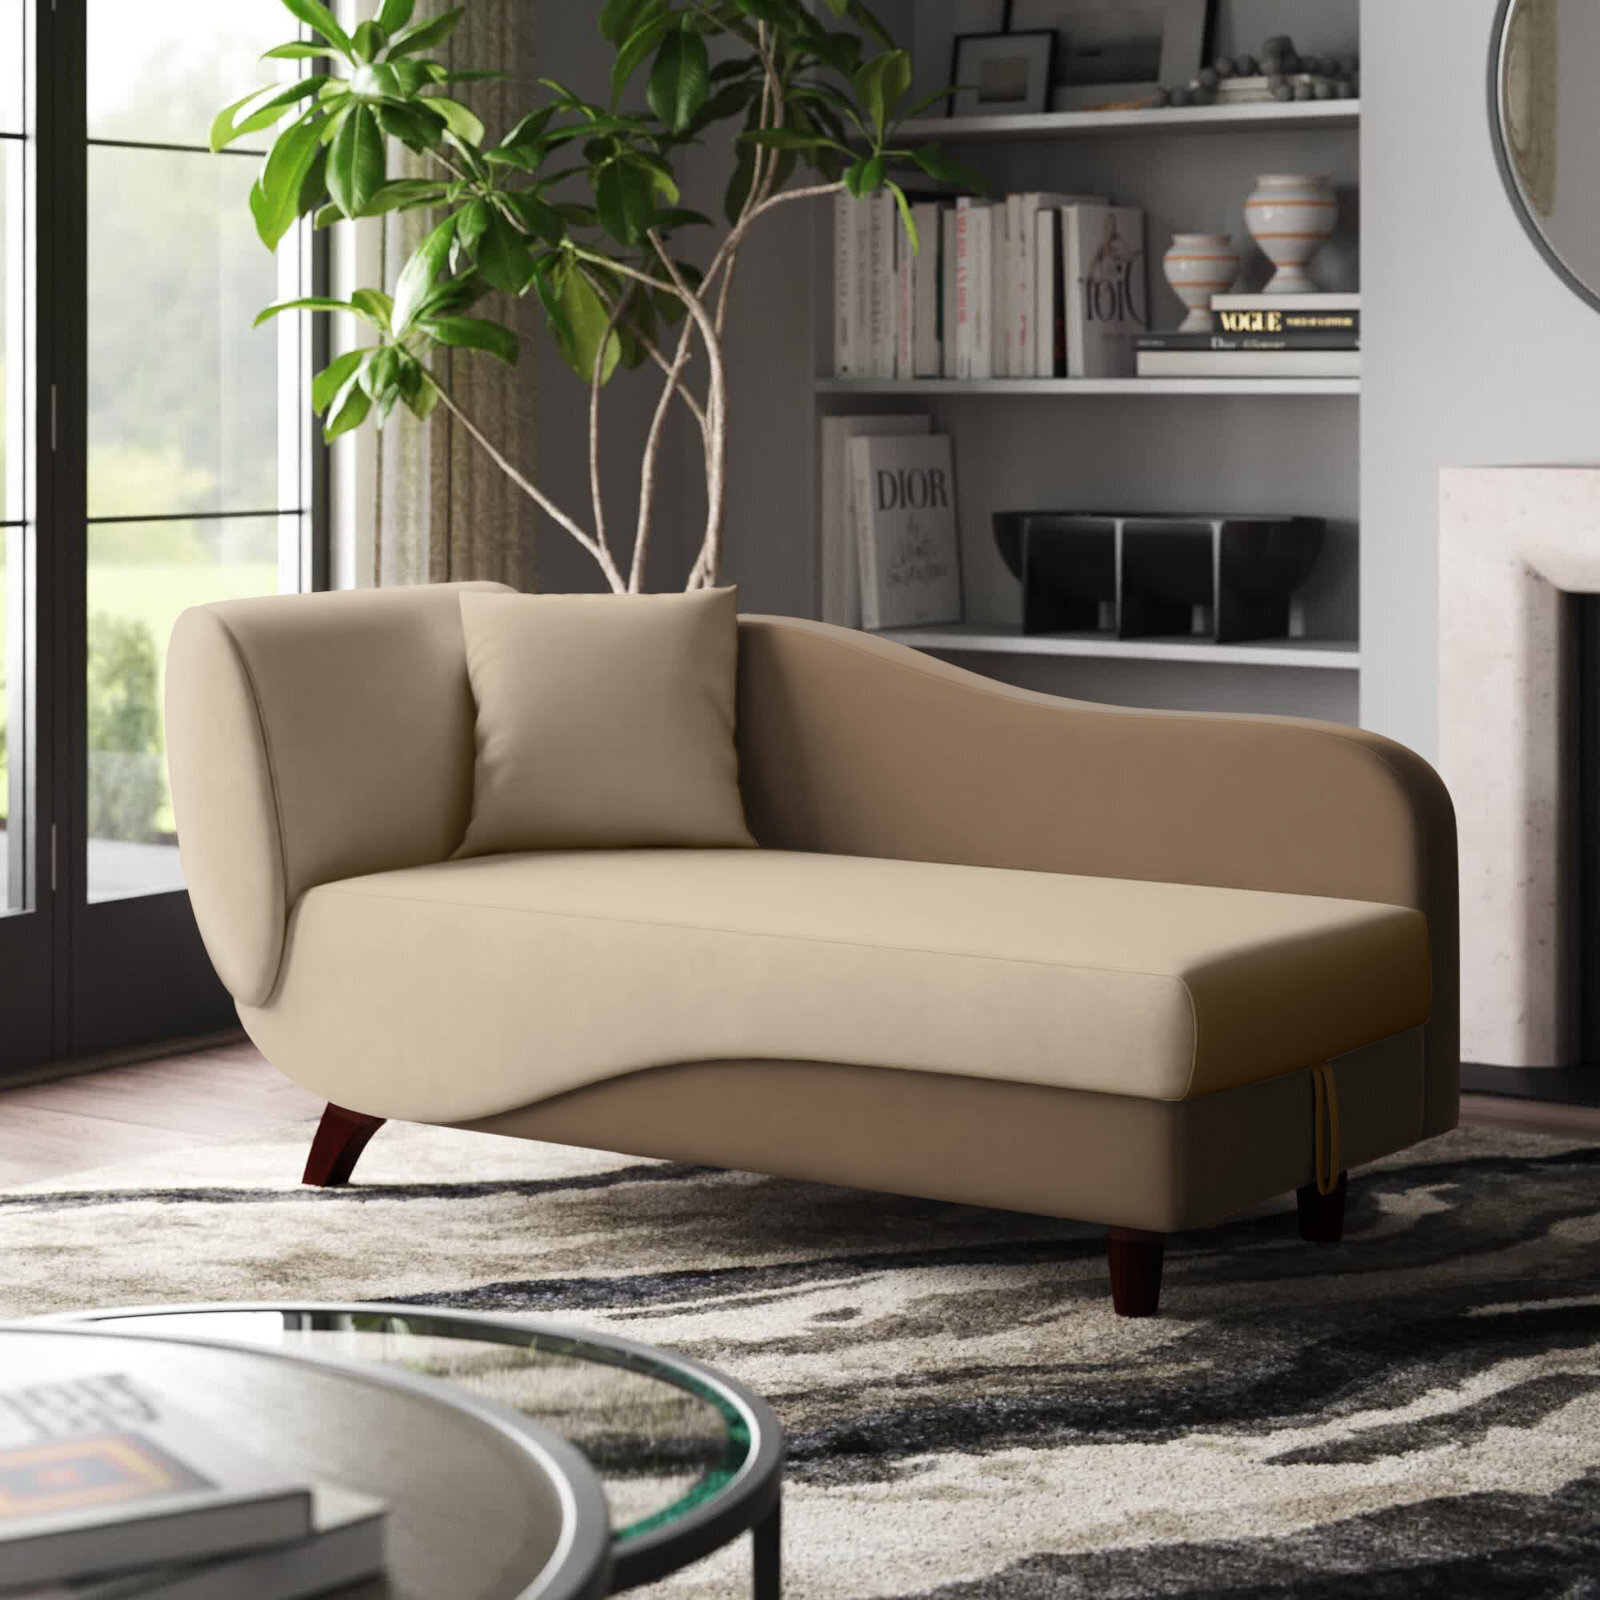 Gray Armless Velvet Chaise Lounge Chair Bench Bedroom Living Room Furniture Grey 